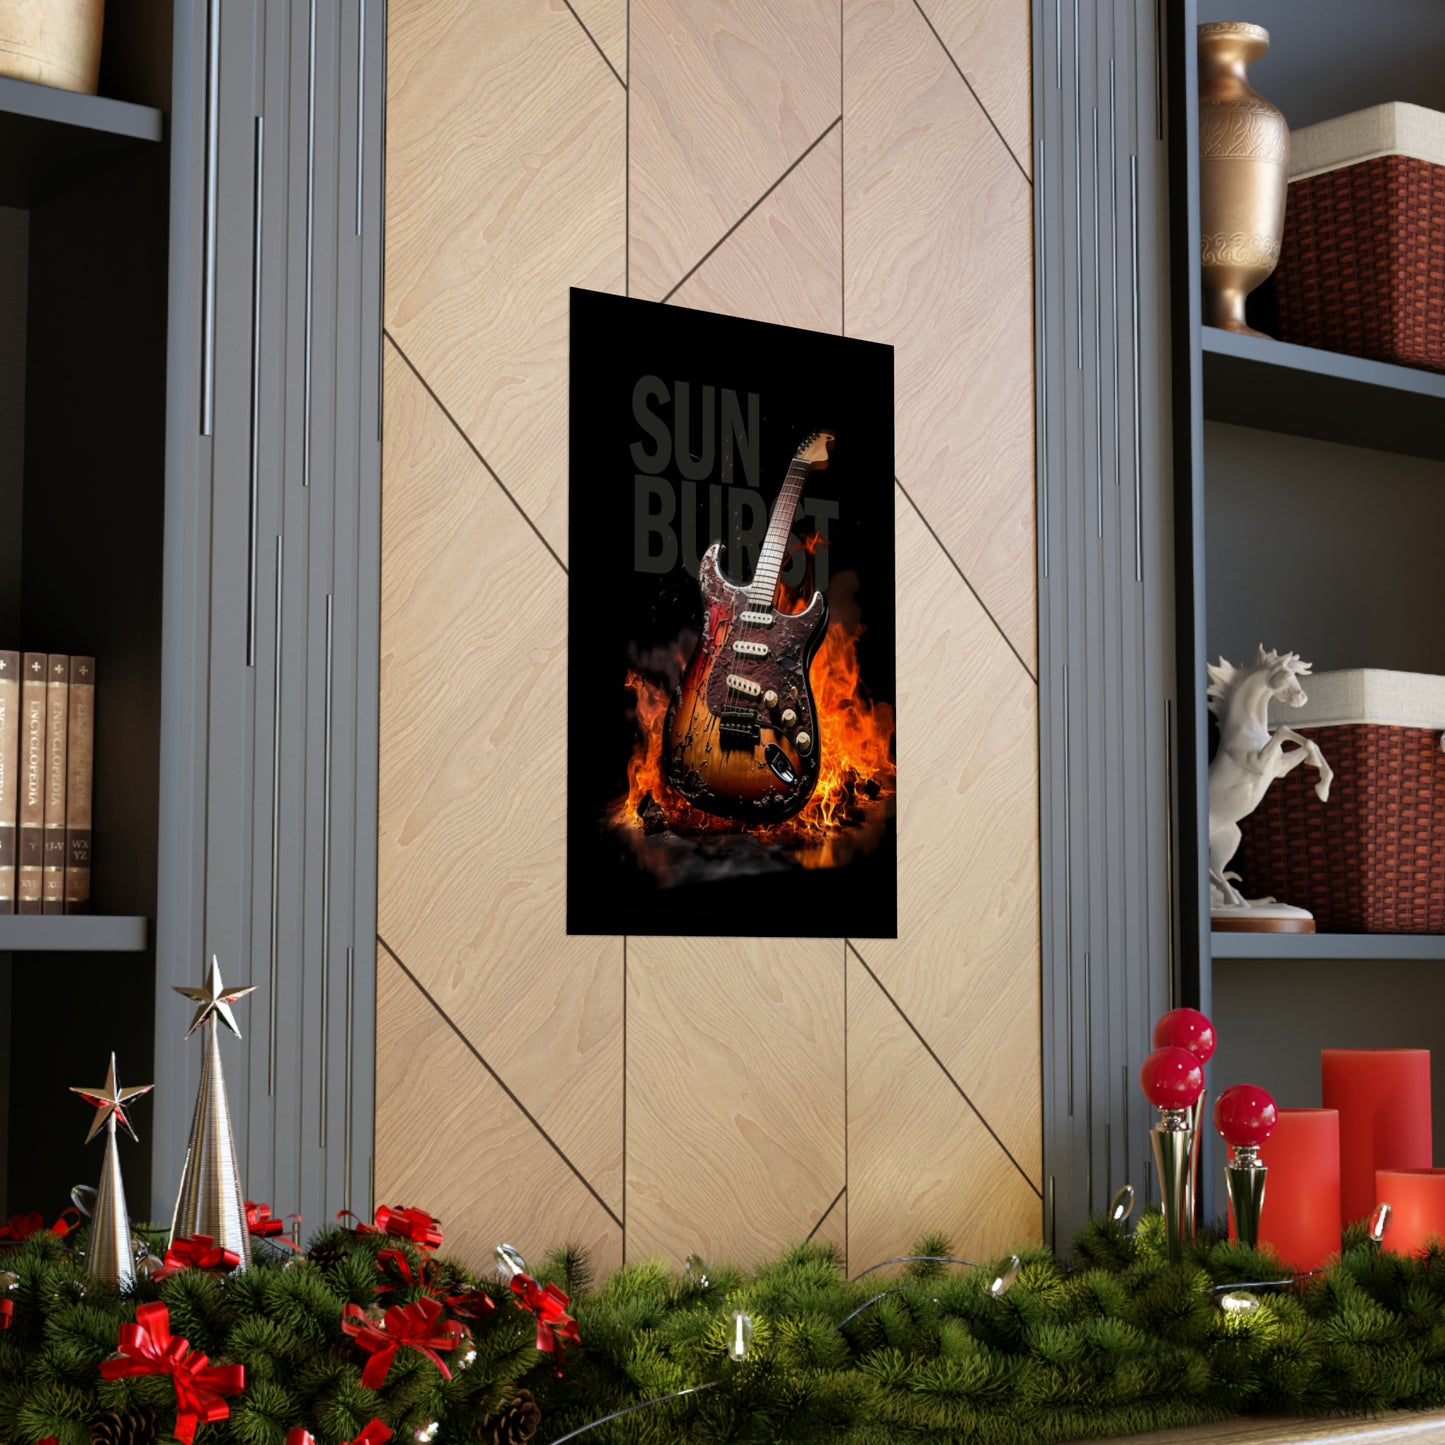 Burning SUNBURST Guitar Poster, Electric Strat-style Guitar on Fire, Vertical Matte. Digital Painting Musician Gift, Studio/Music Room Decor